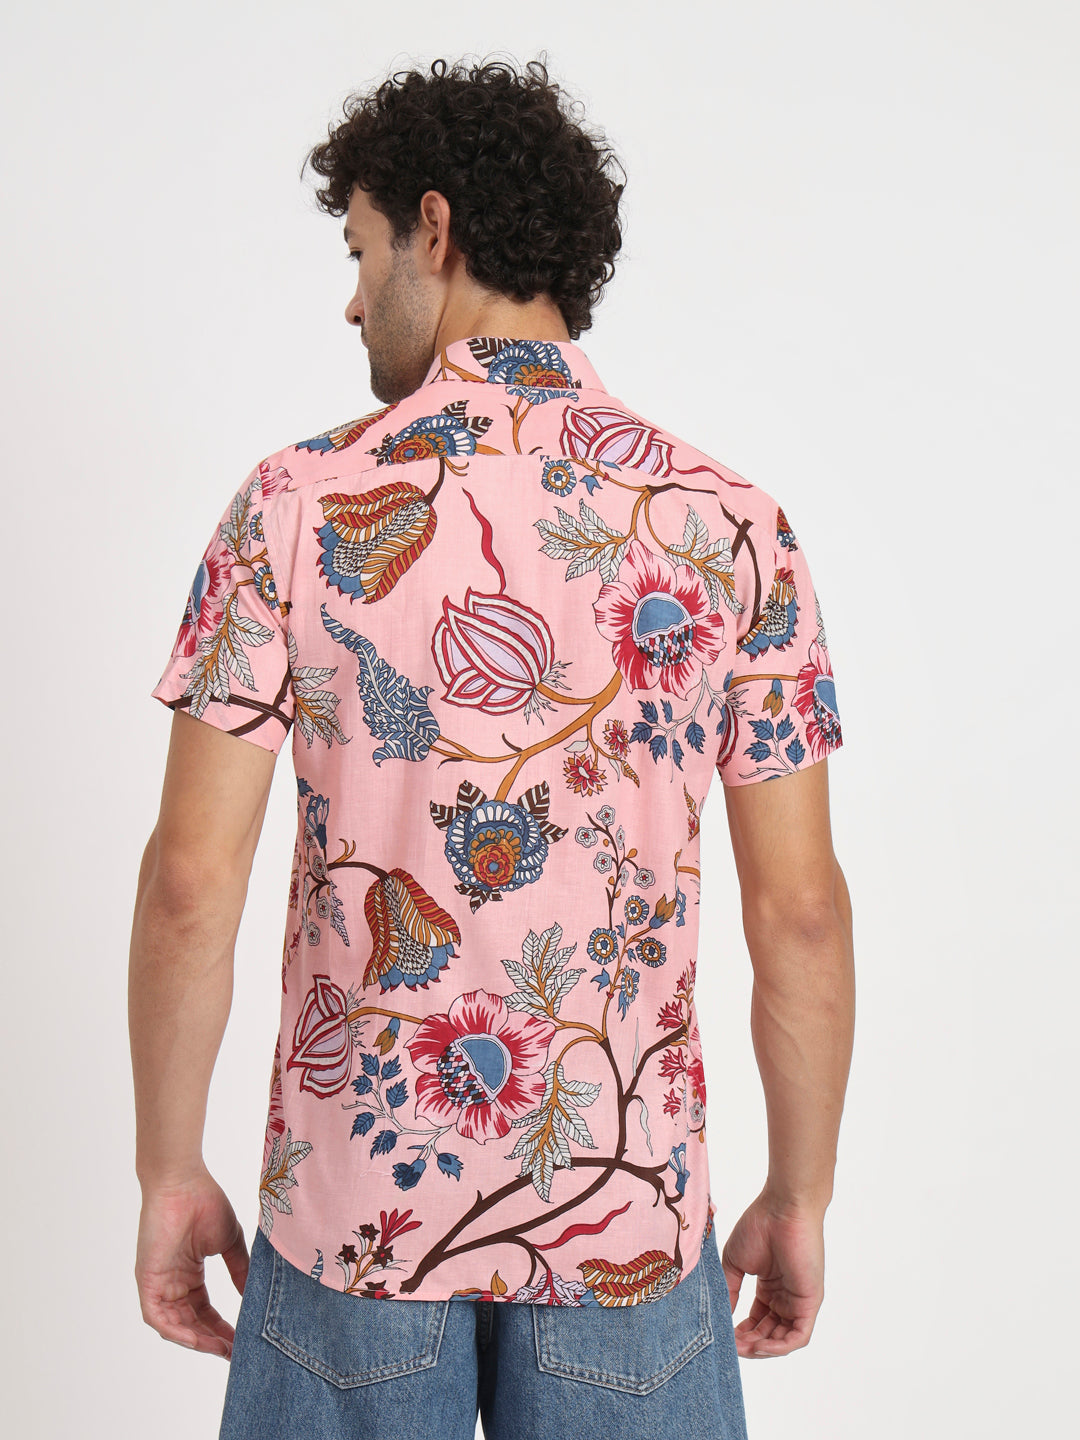 Firangi Yarn Floral Chintz Art Printed Cotton Pink Shirt For Men | Indian Printed Shirt